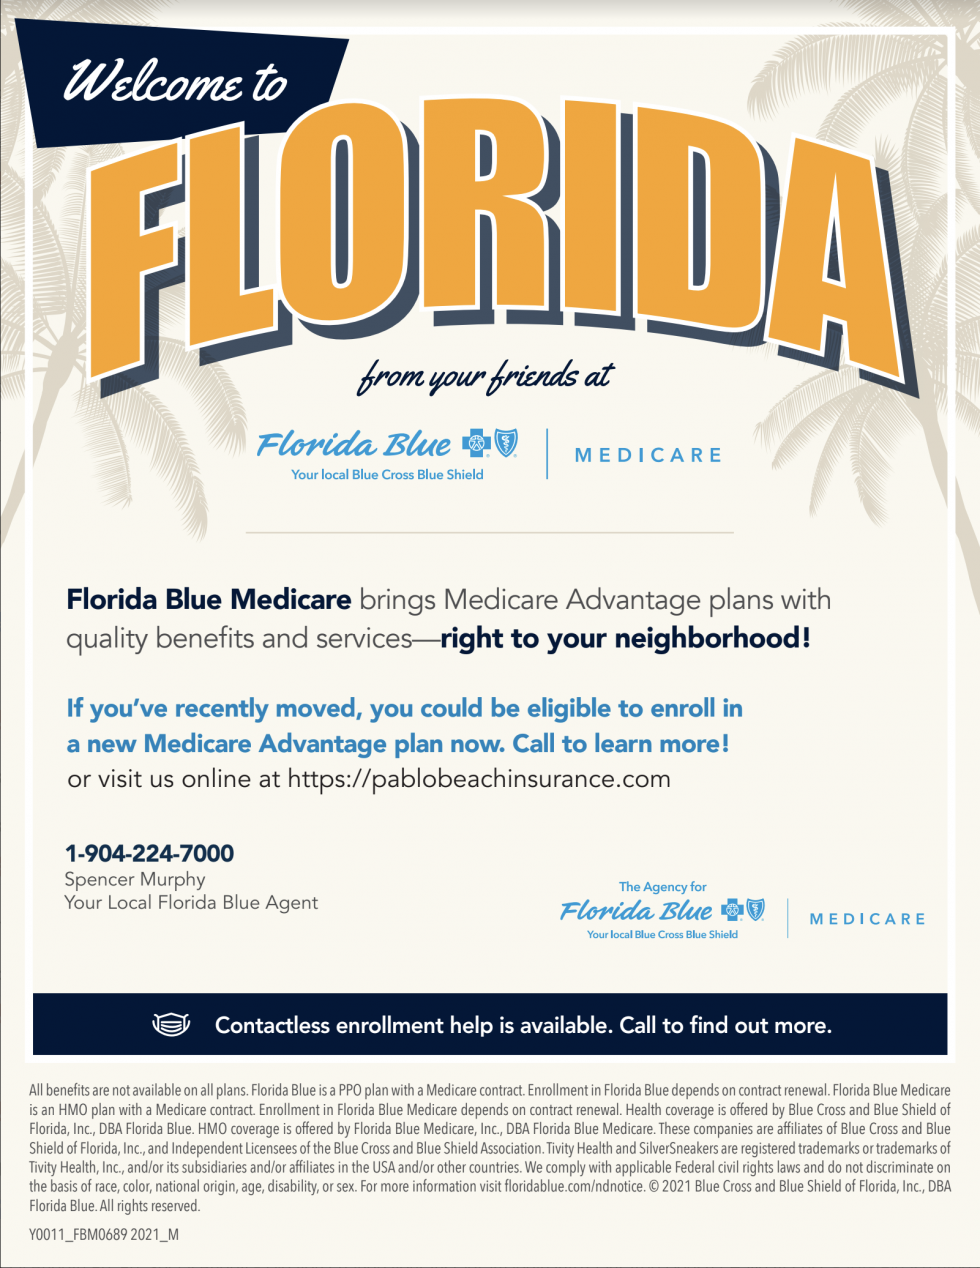 Florida Blue Medicare Insurance, Jacksonville